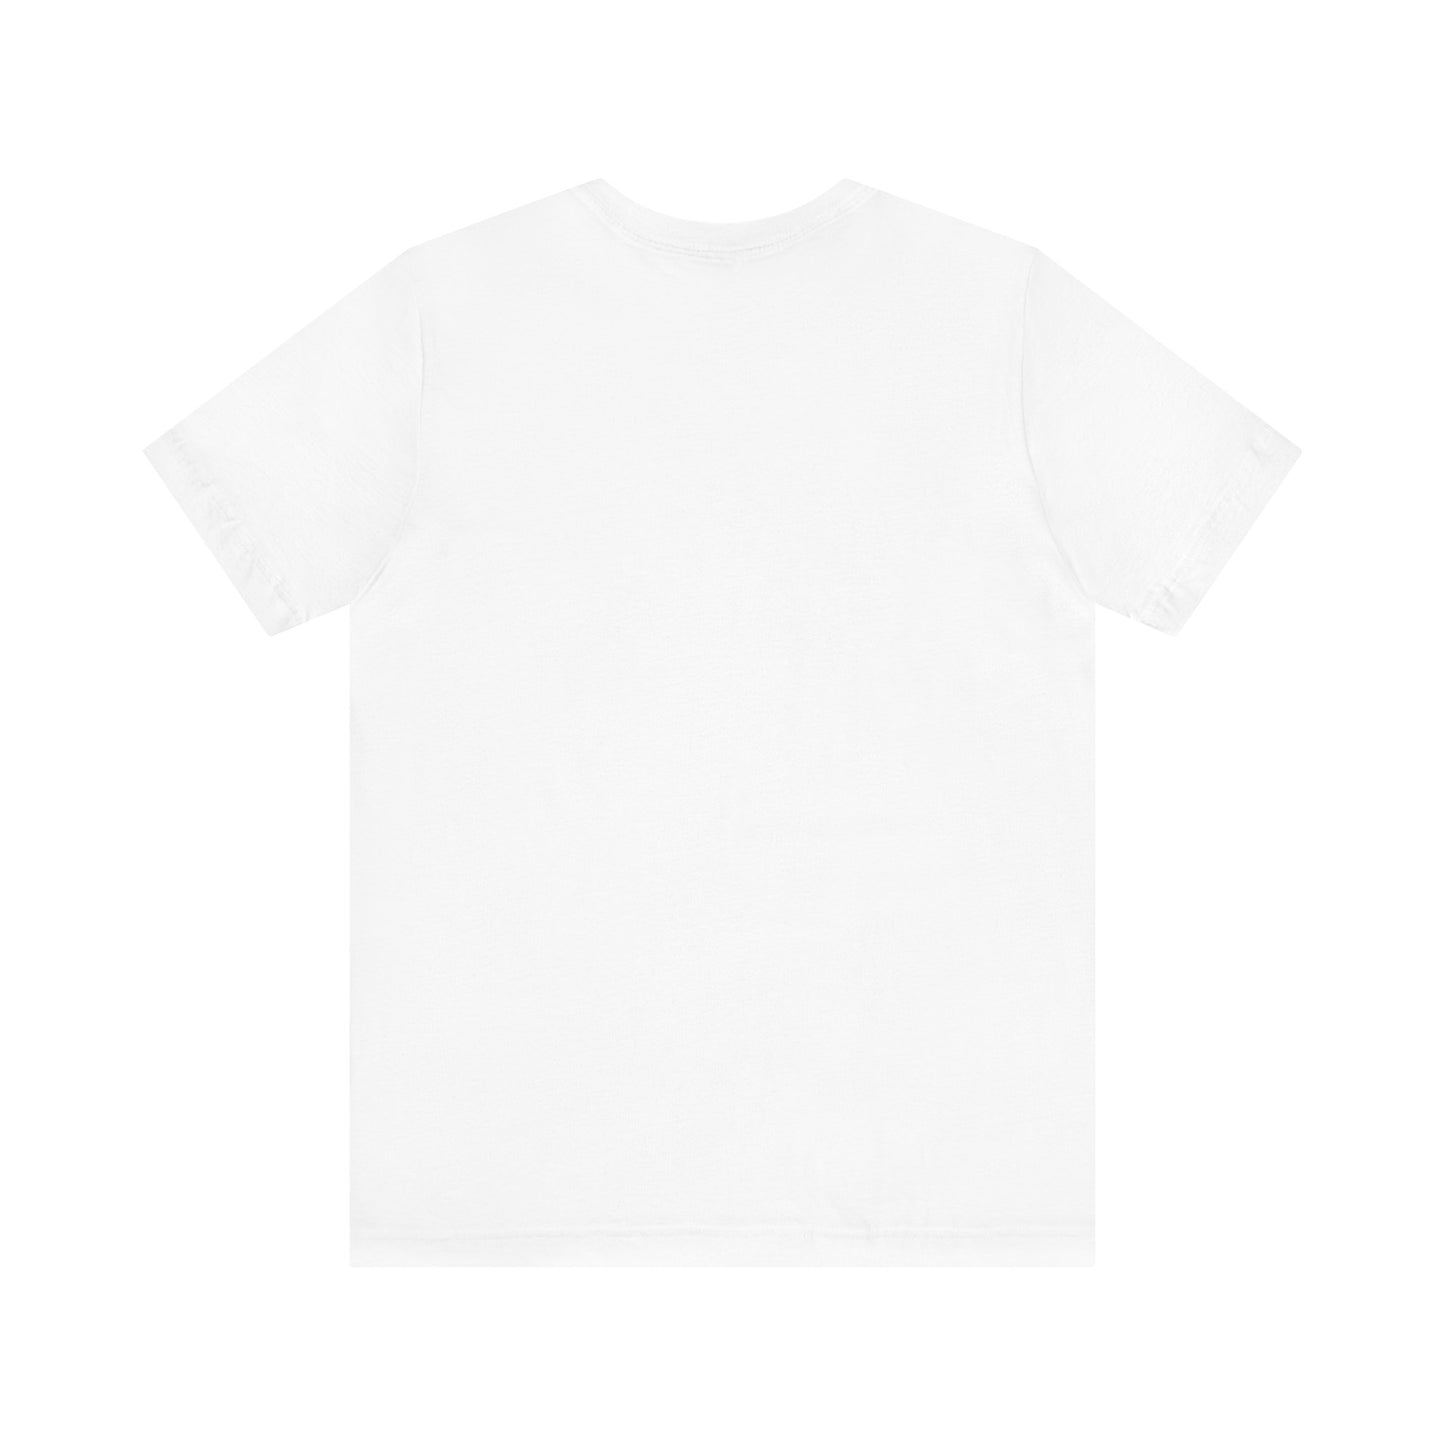 So Long London T-Shirt - Trendy Lowercase